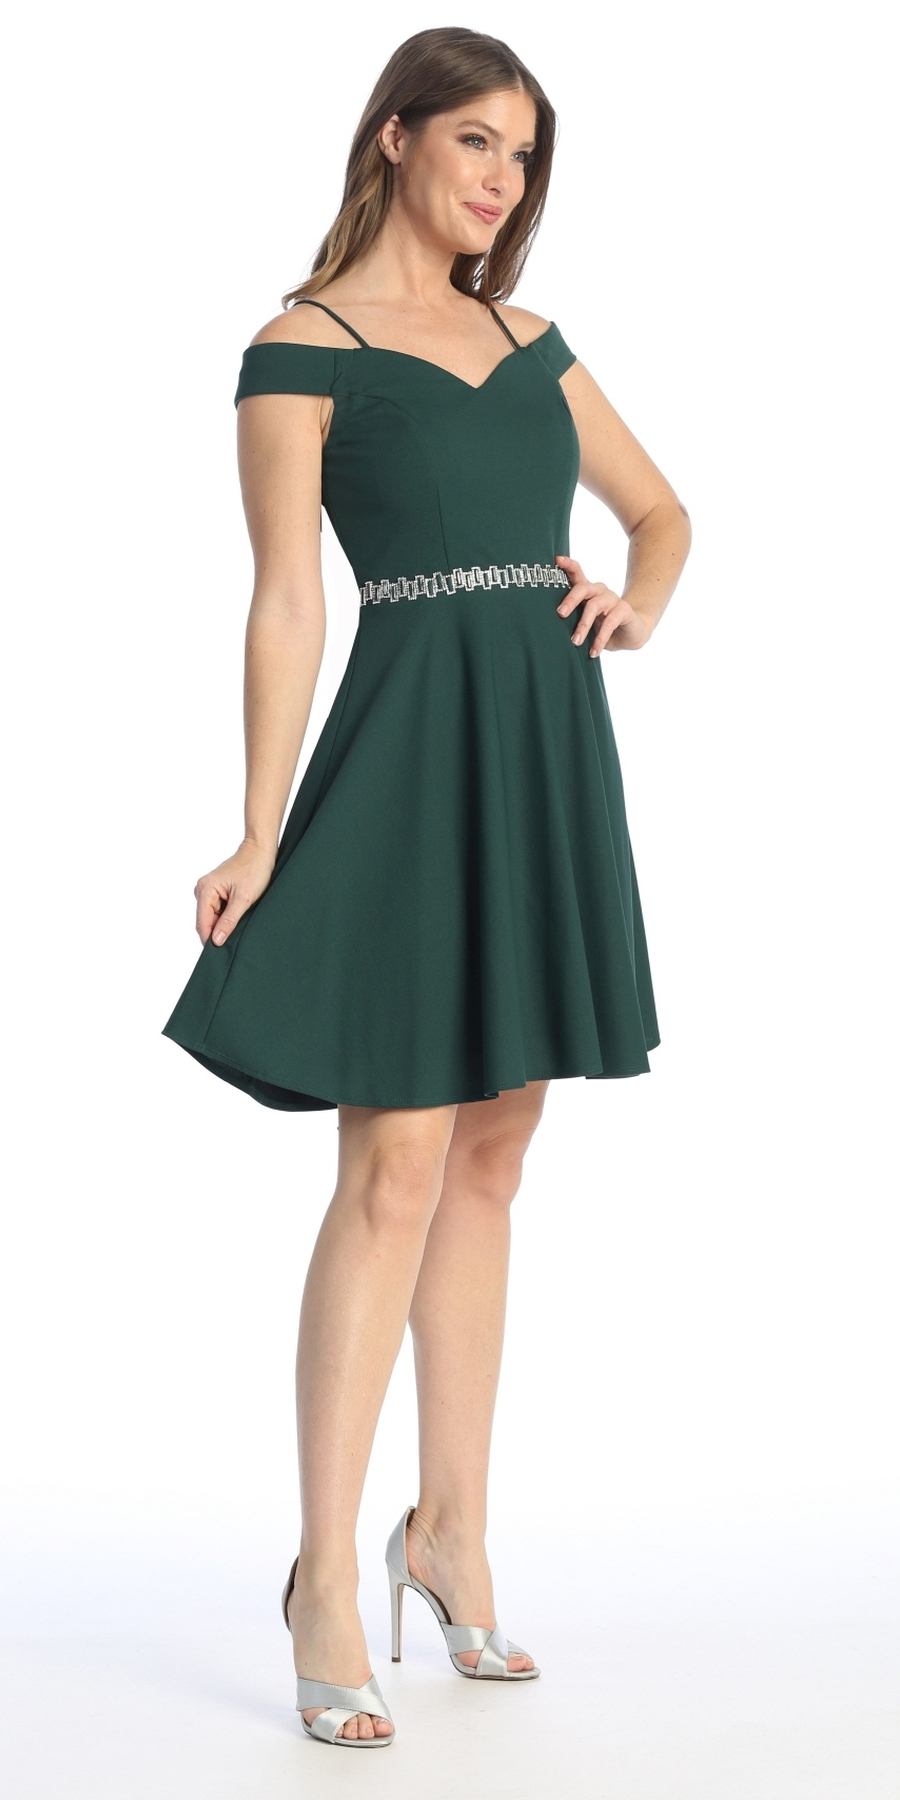 Celavie 6395-S Dress